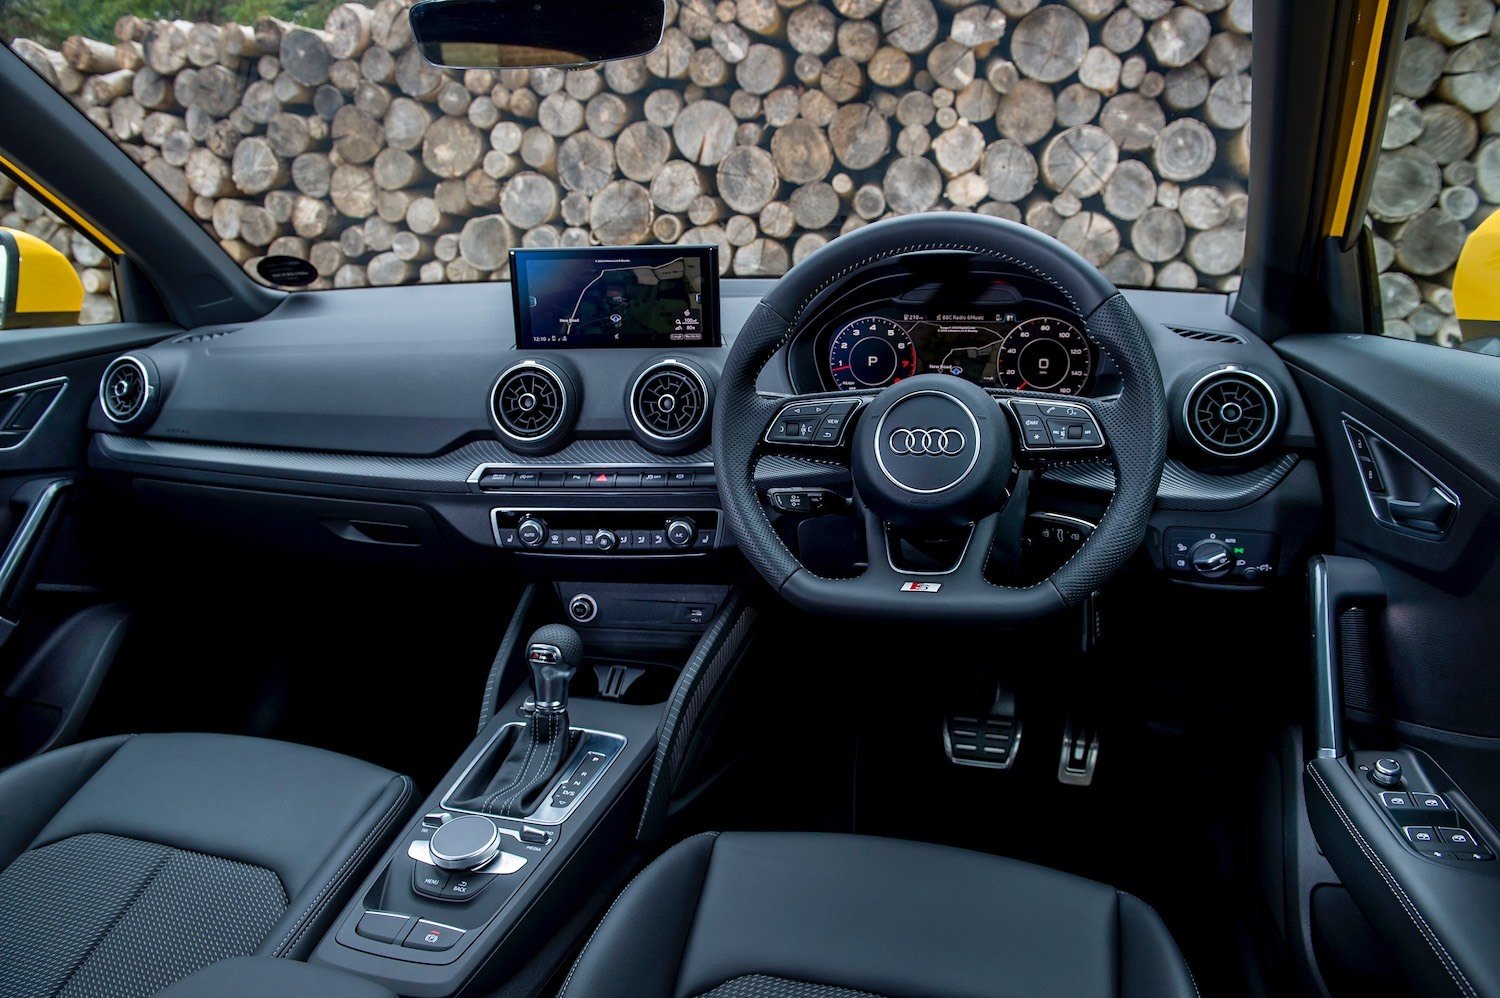 Neil Lyndon reviews the Audi Q2 Quattro SUV for Drive 3